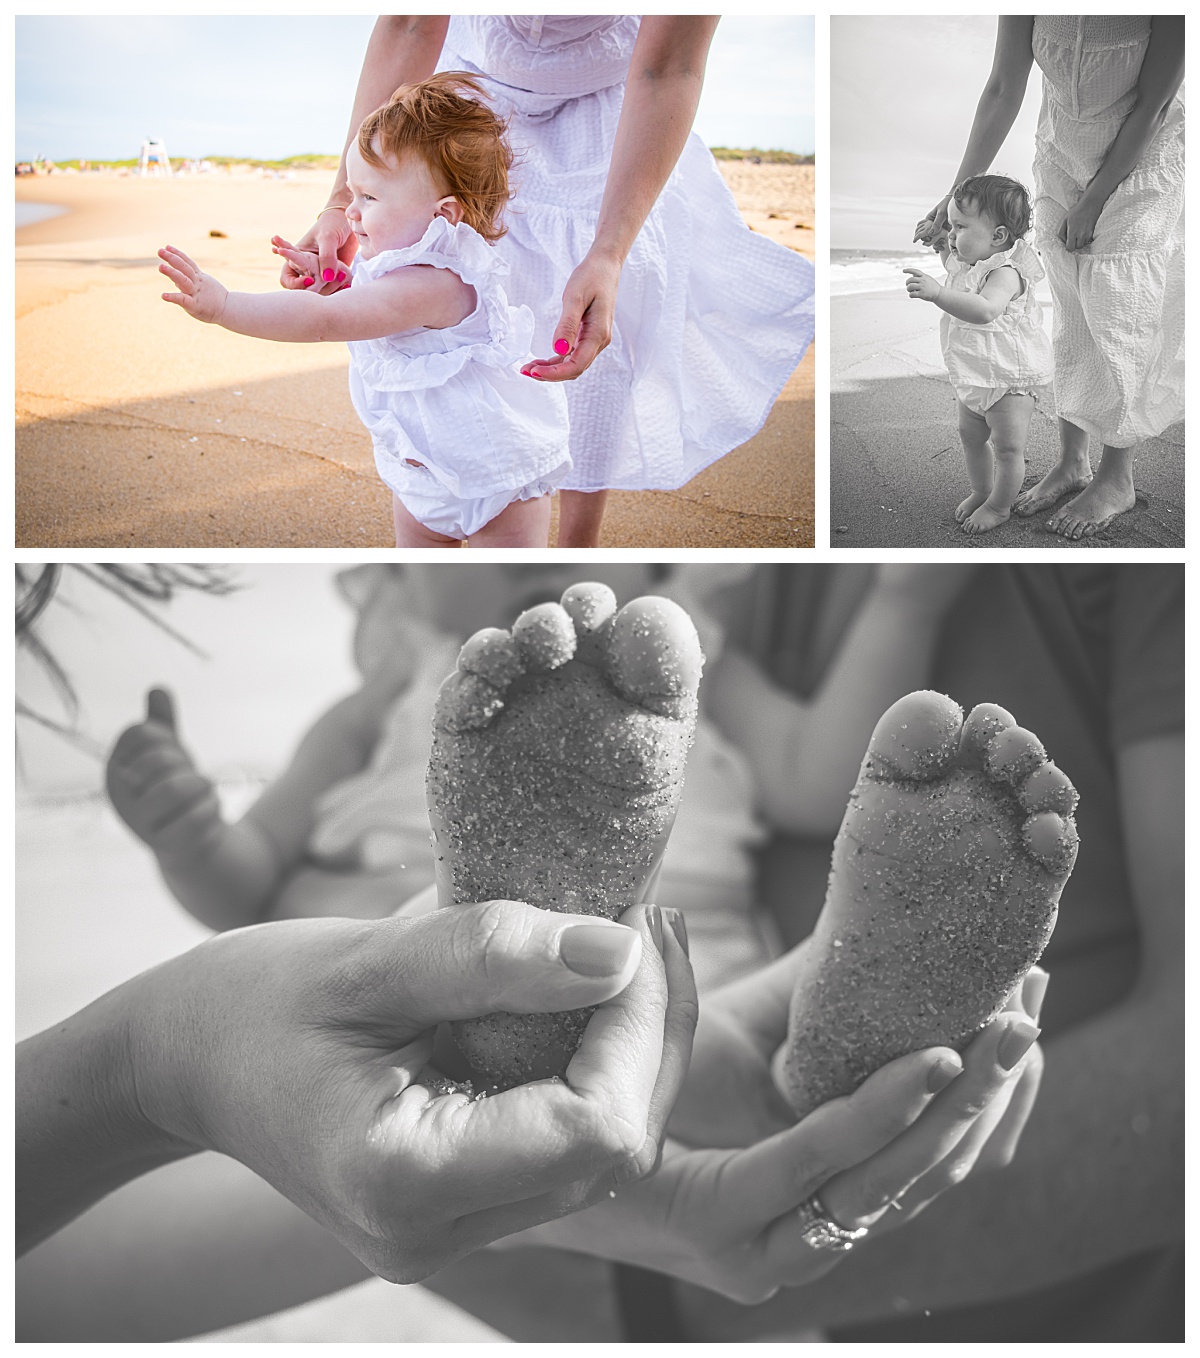 Mini Session, Mommy and Me, Virginia, Virginia Beach Photographer, Beach, Sandy Toes, Giggles,